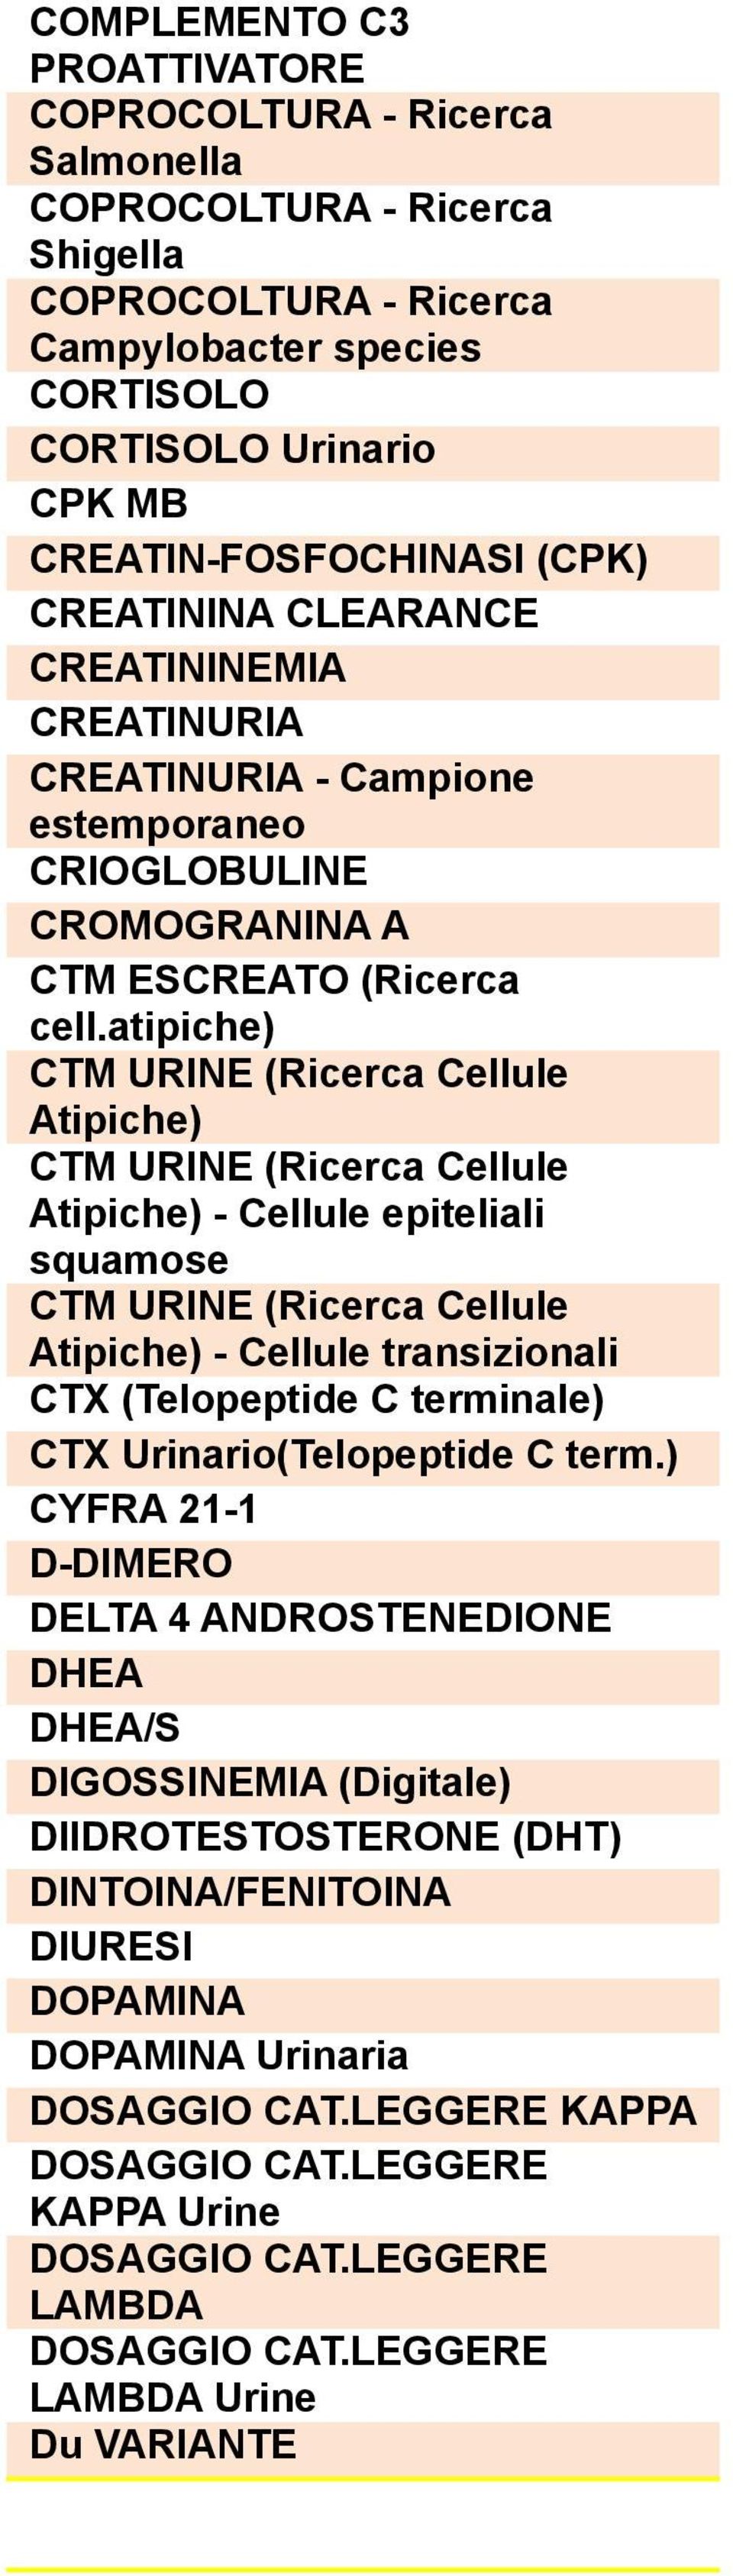 atipiche) CTM URINE (Ricerca Cellule Atipiche) CTM URINE (Ricerca Cellule Atipiche) - Cellule epiteliali squamose CTM URINE (Ricerca Cellule Atipiche) - Cellule transizionali CTX (Telopeptide C